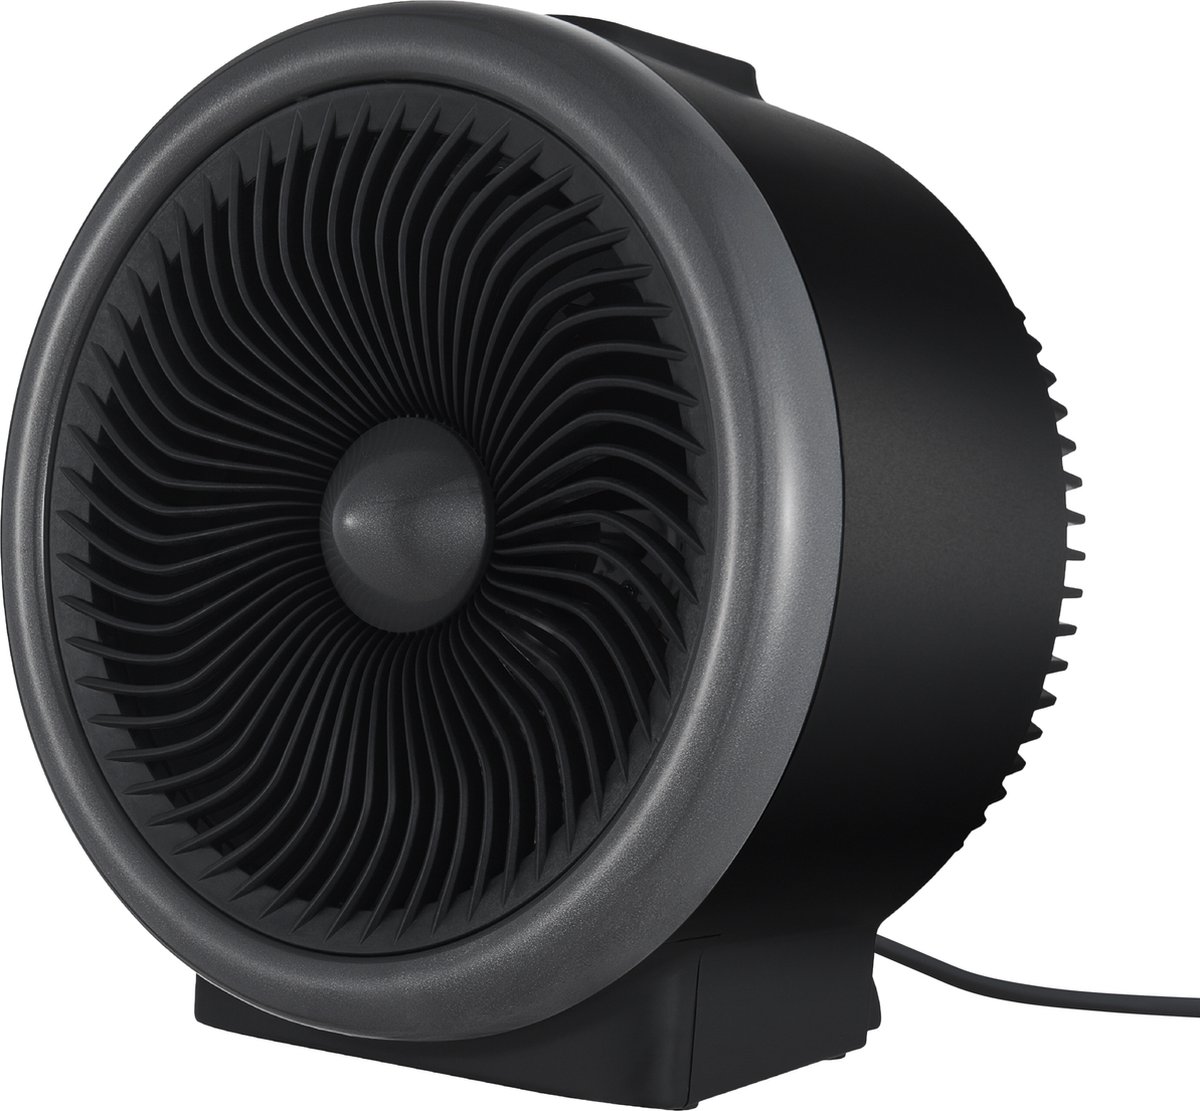 NORDIC HOME HTR-520 Fan Heater met Vortex technologie - 2000W - Zwart